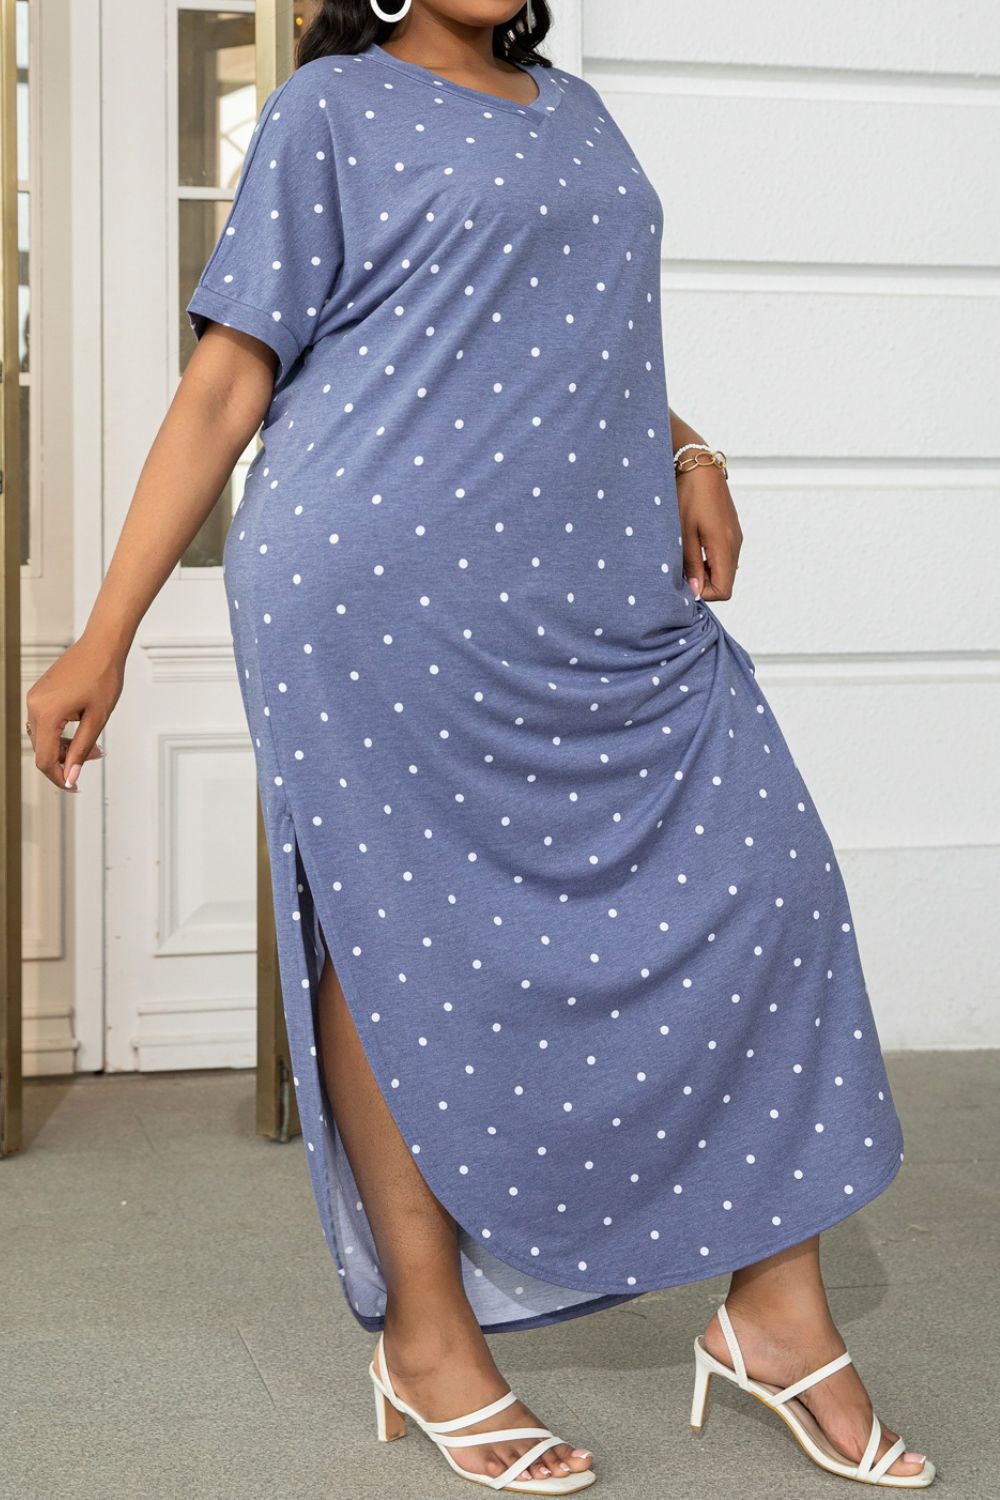 Plus Size Short Sleeve Maxi Dress